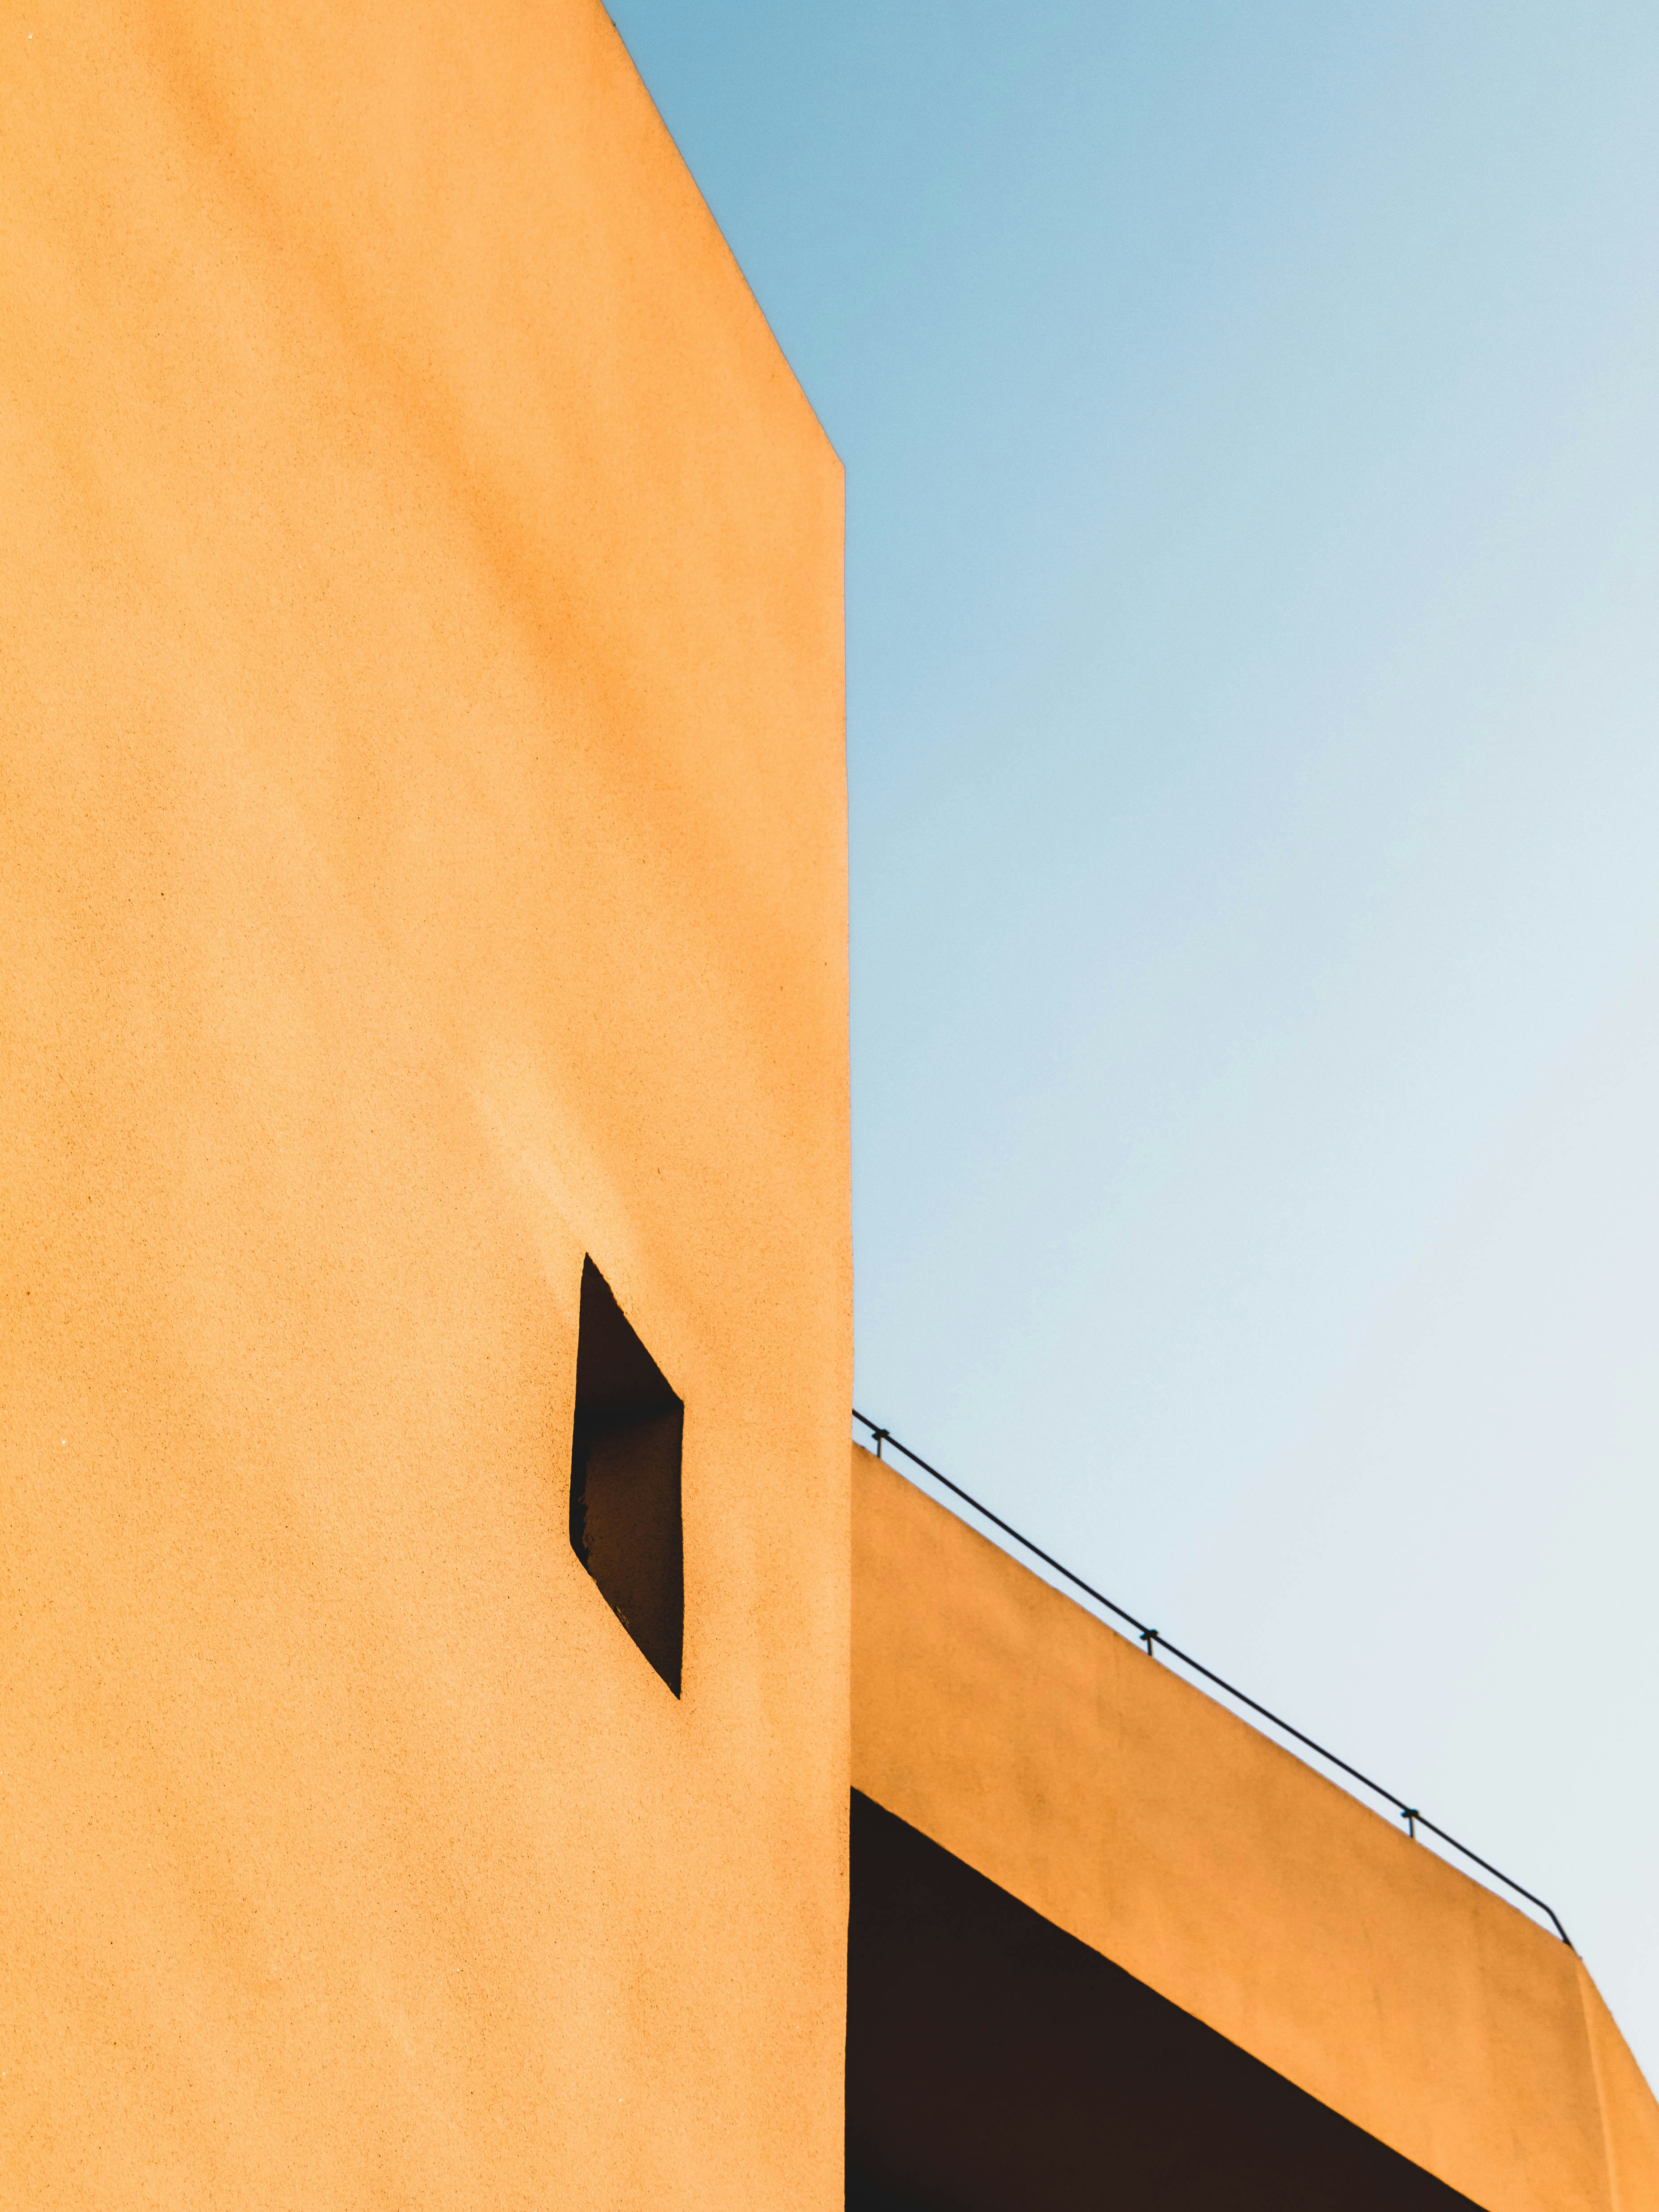 orange concrete building under blue sky during daytime